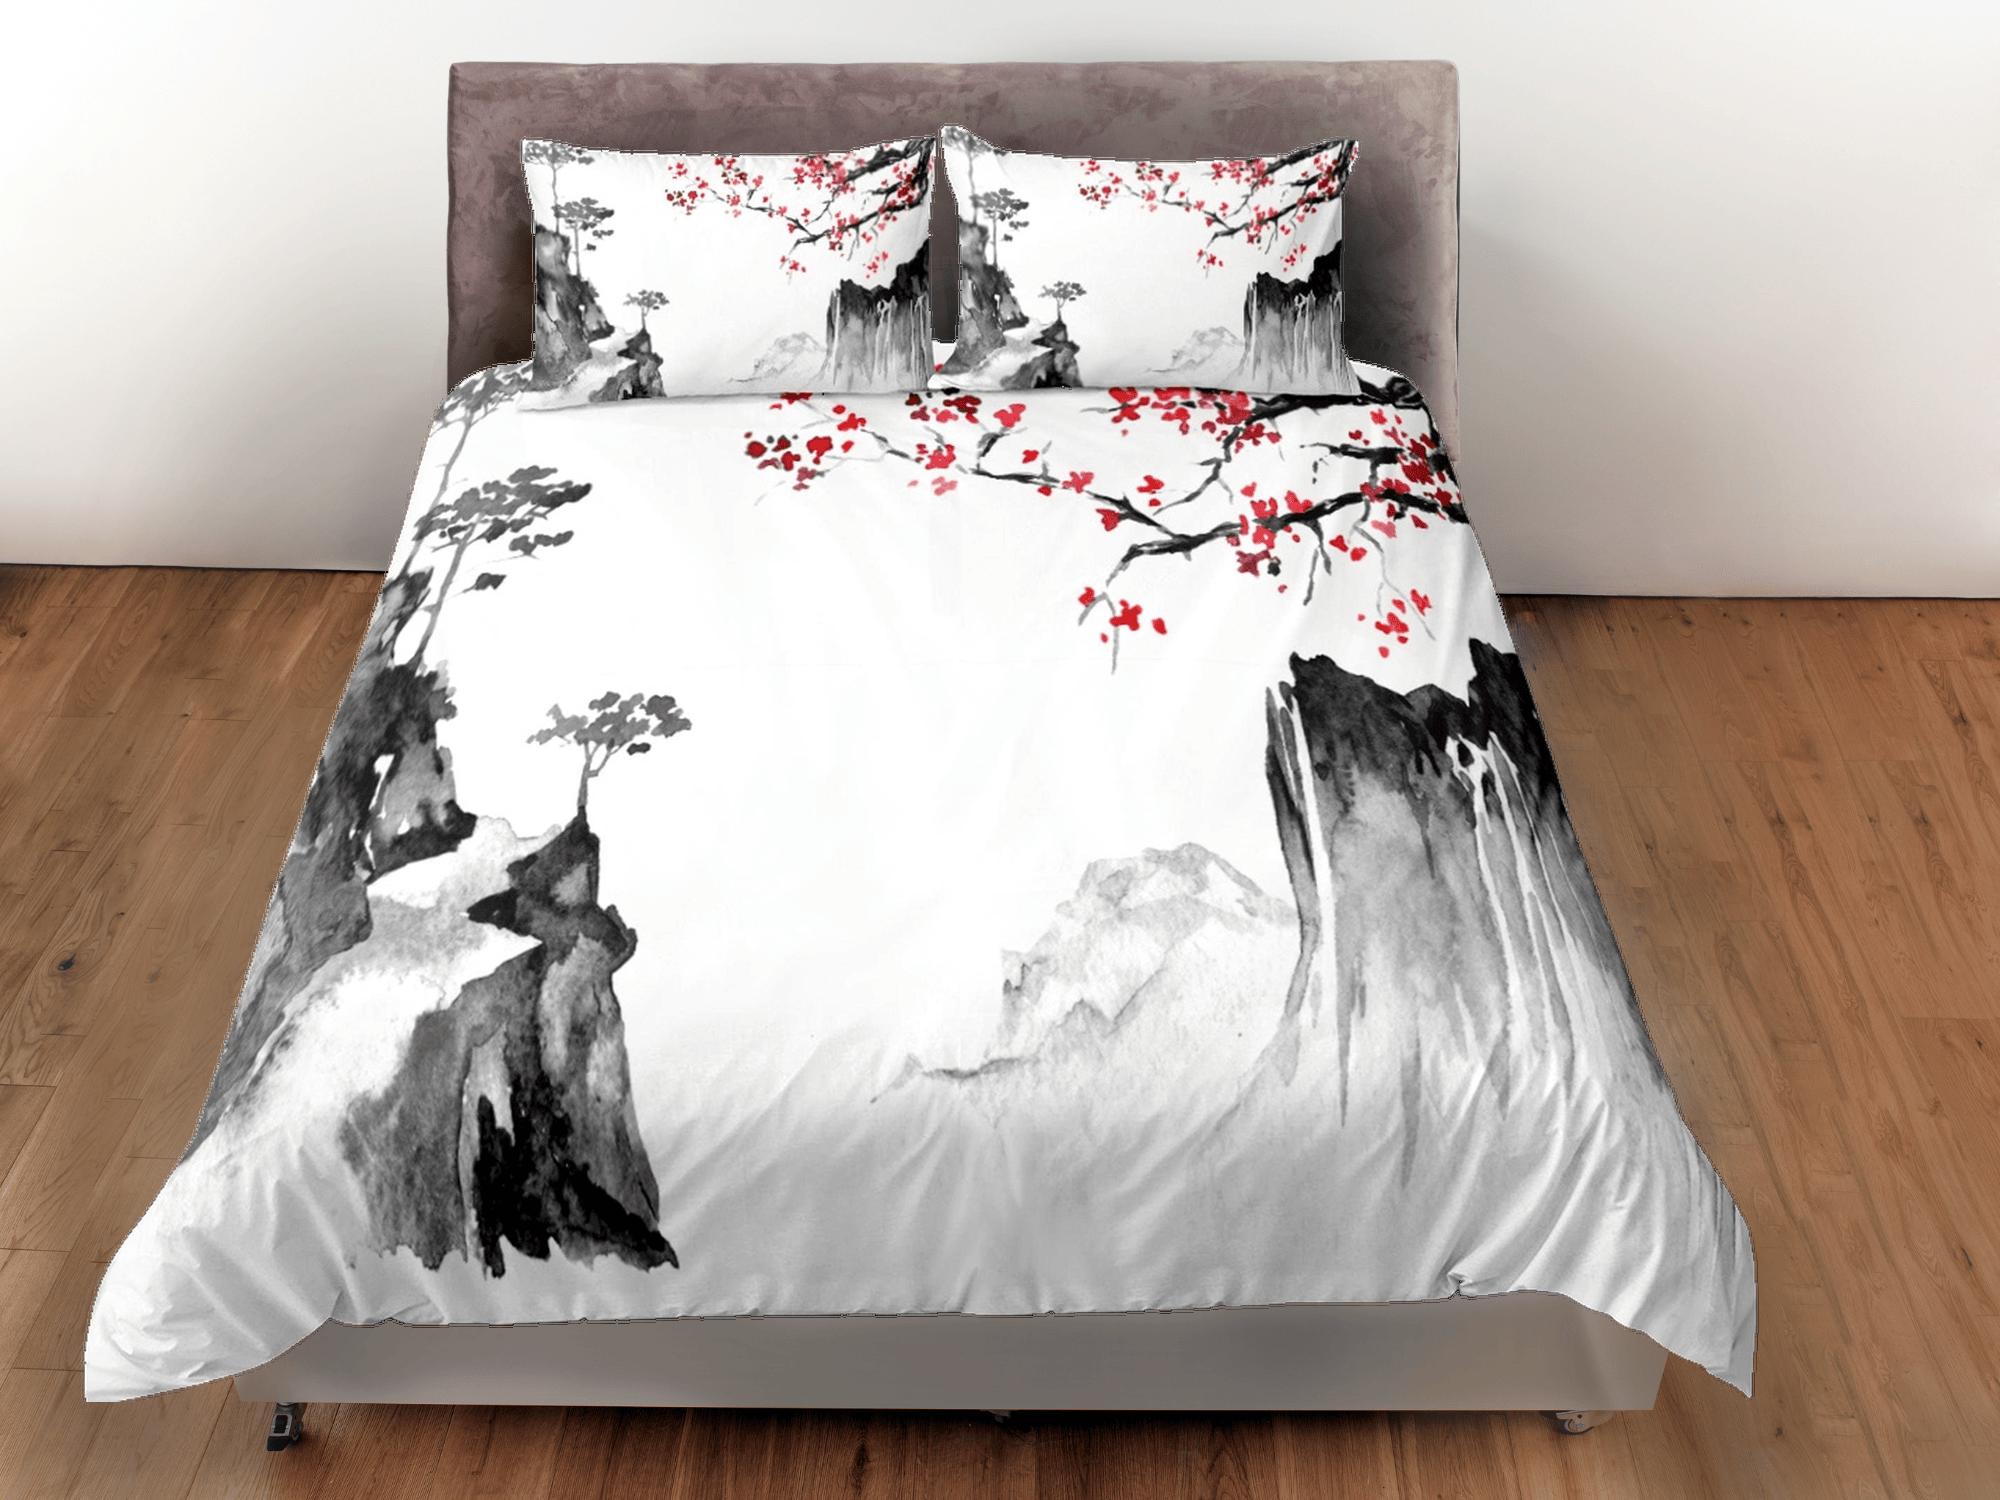 daintyduvet Cherry blossom oriental painting bedding floral prints duvet cover queen, king, boho bedding designer bedspread full size bedding aesthetic